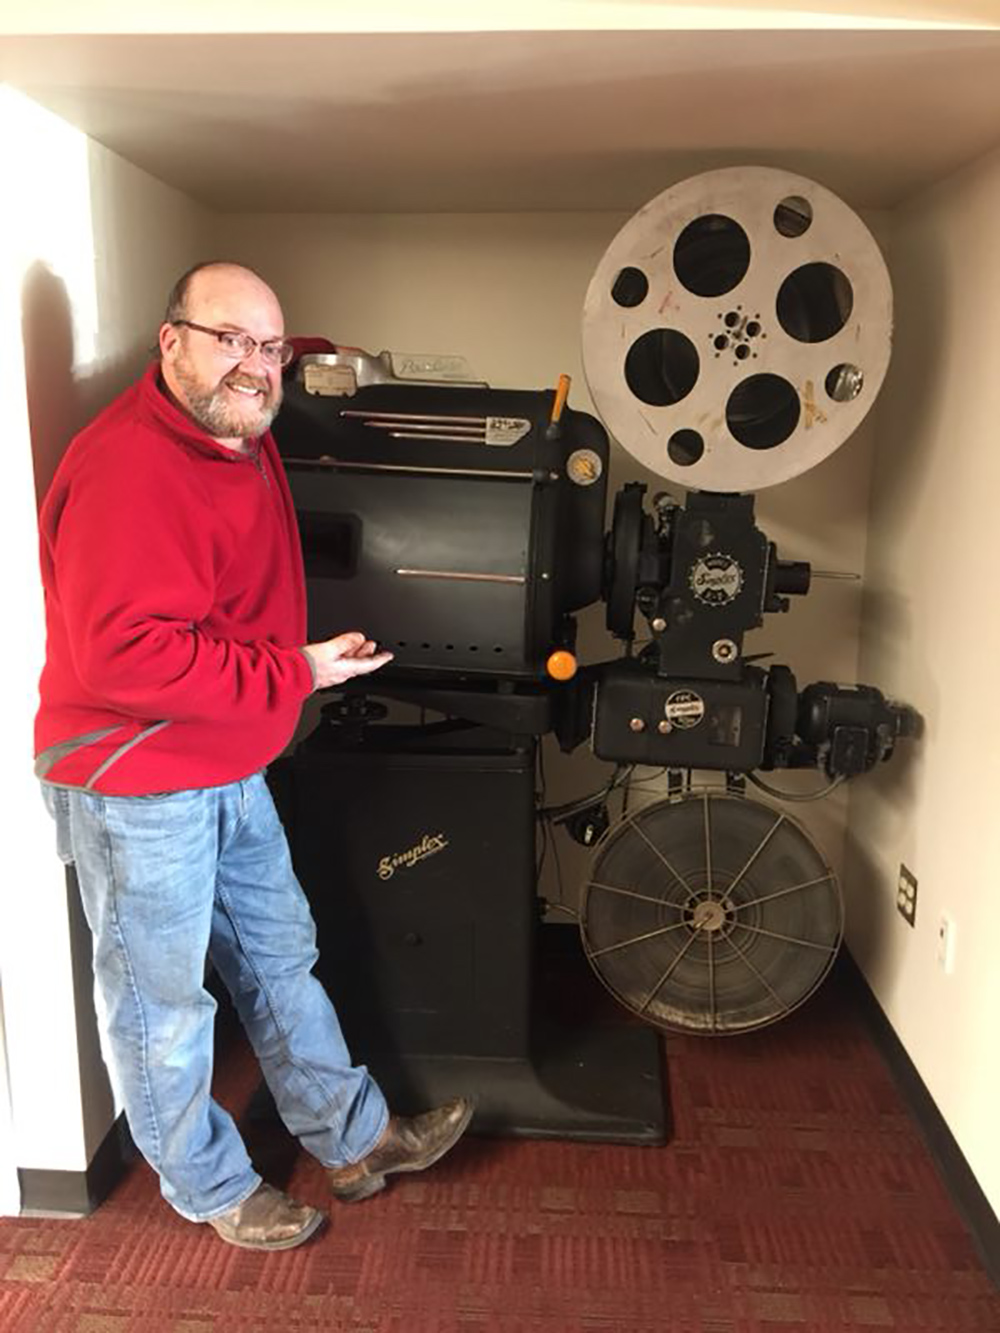 Six-foot 1930s film projector on display at Media School: News